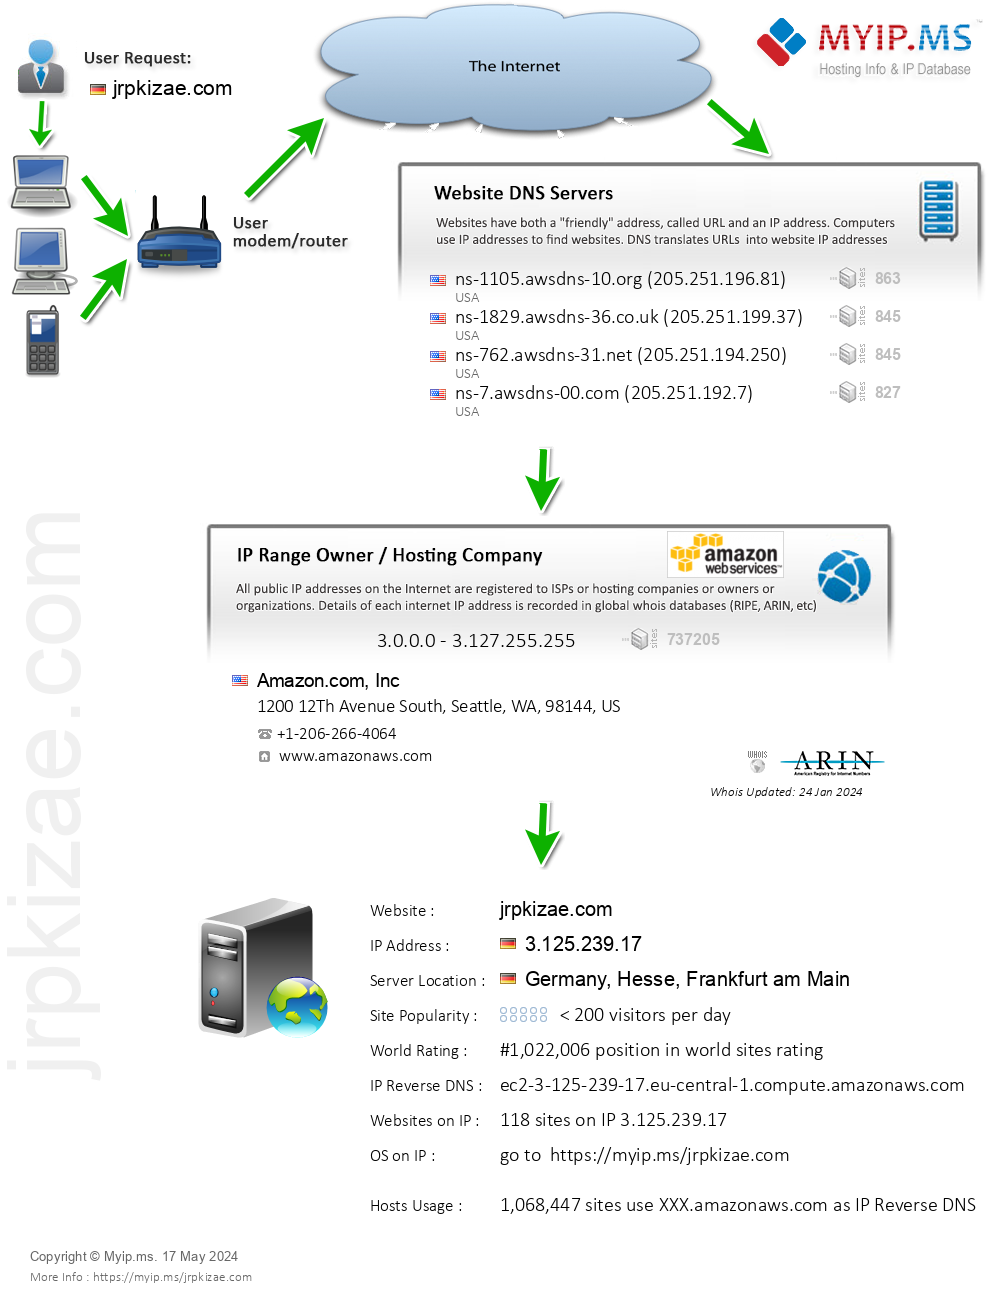 Jrpkizae.com - Website Hosting Visual IP Diagram